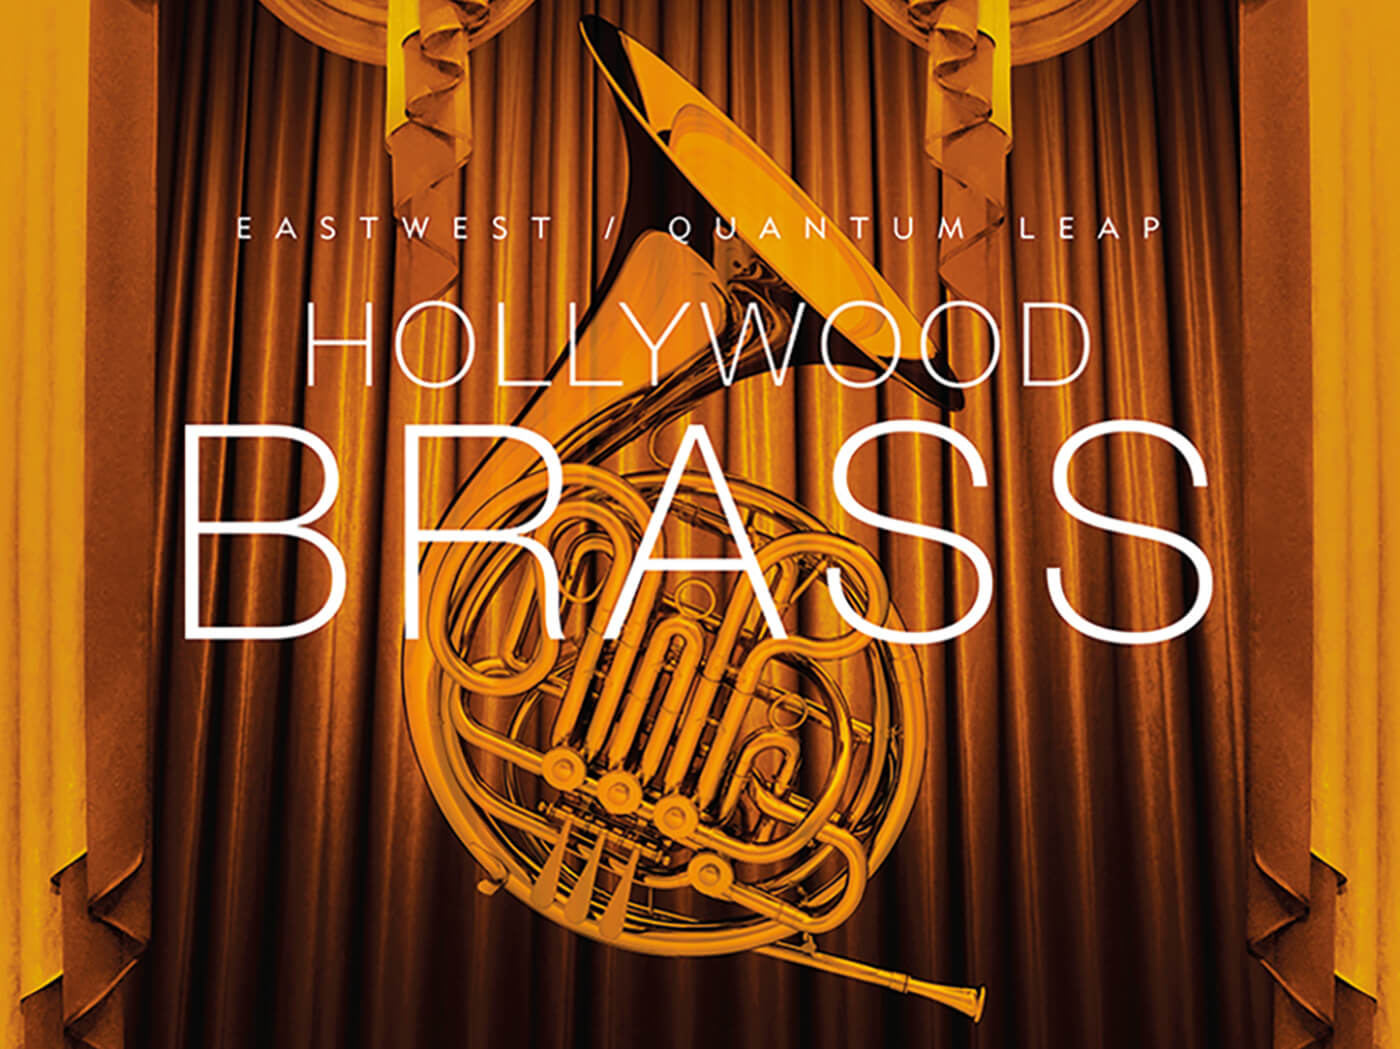 eastwest hollywood brass